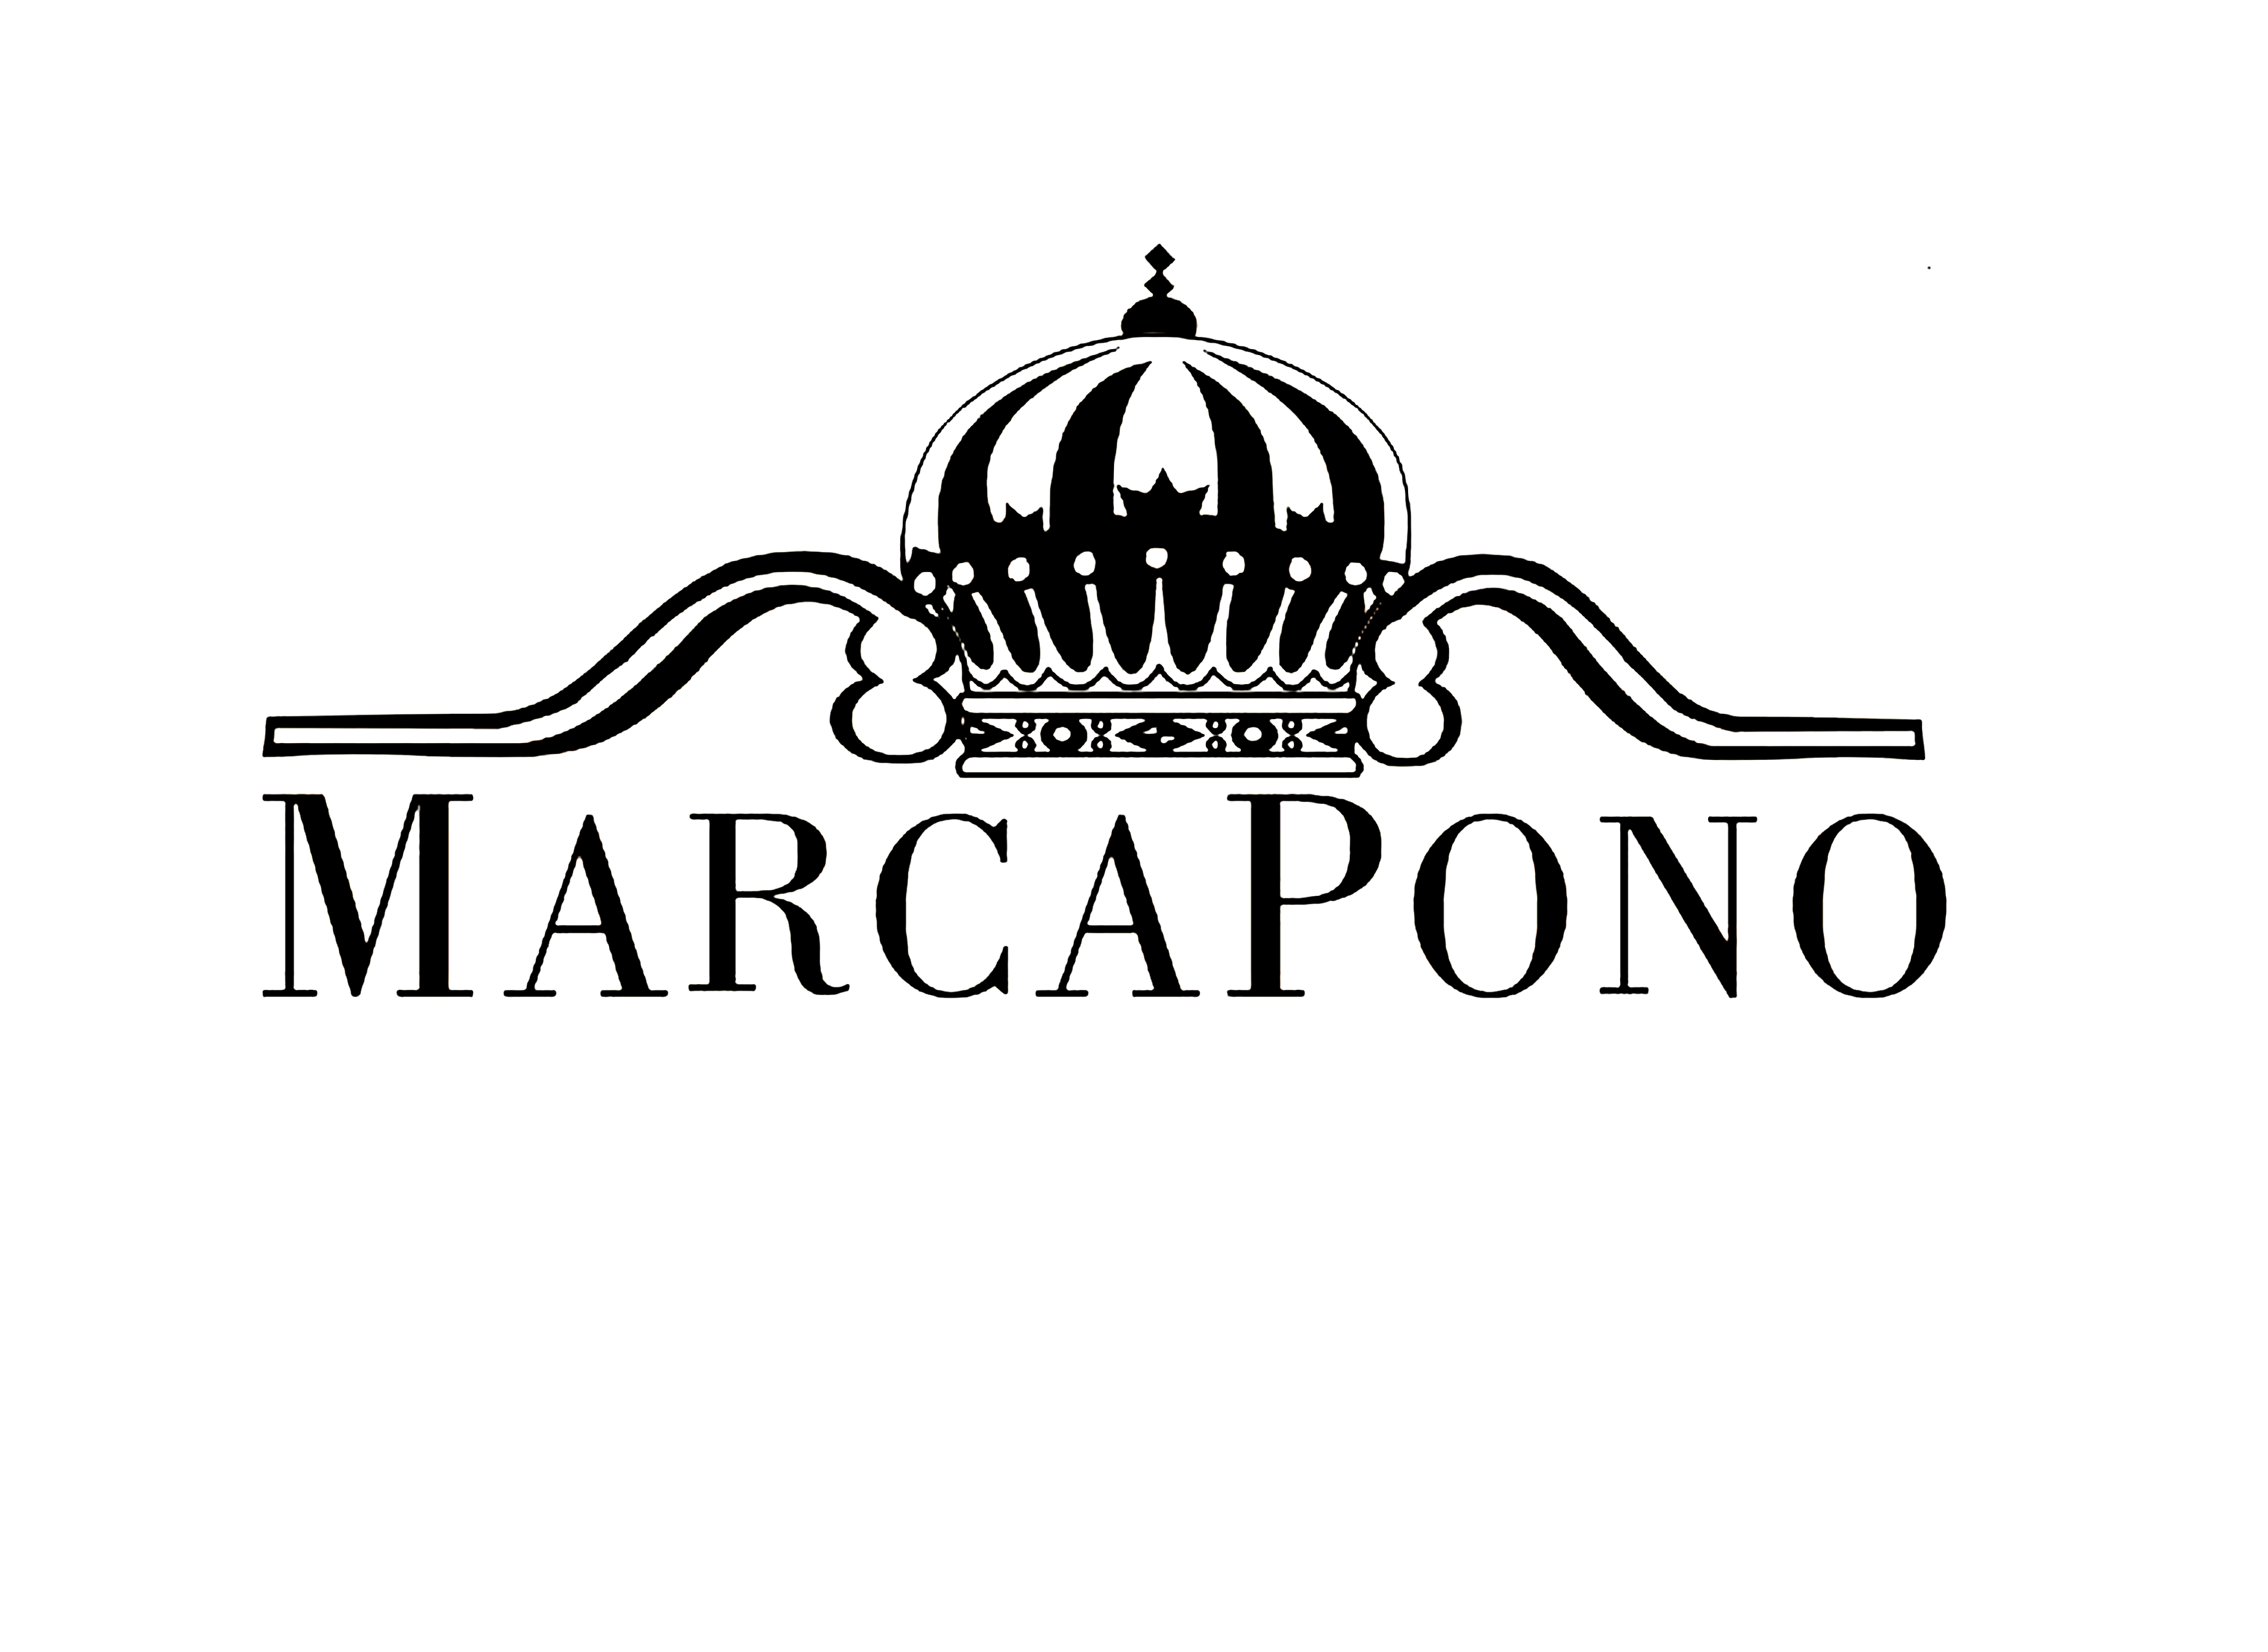 MARCAPONO